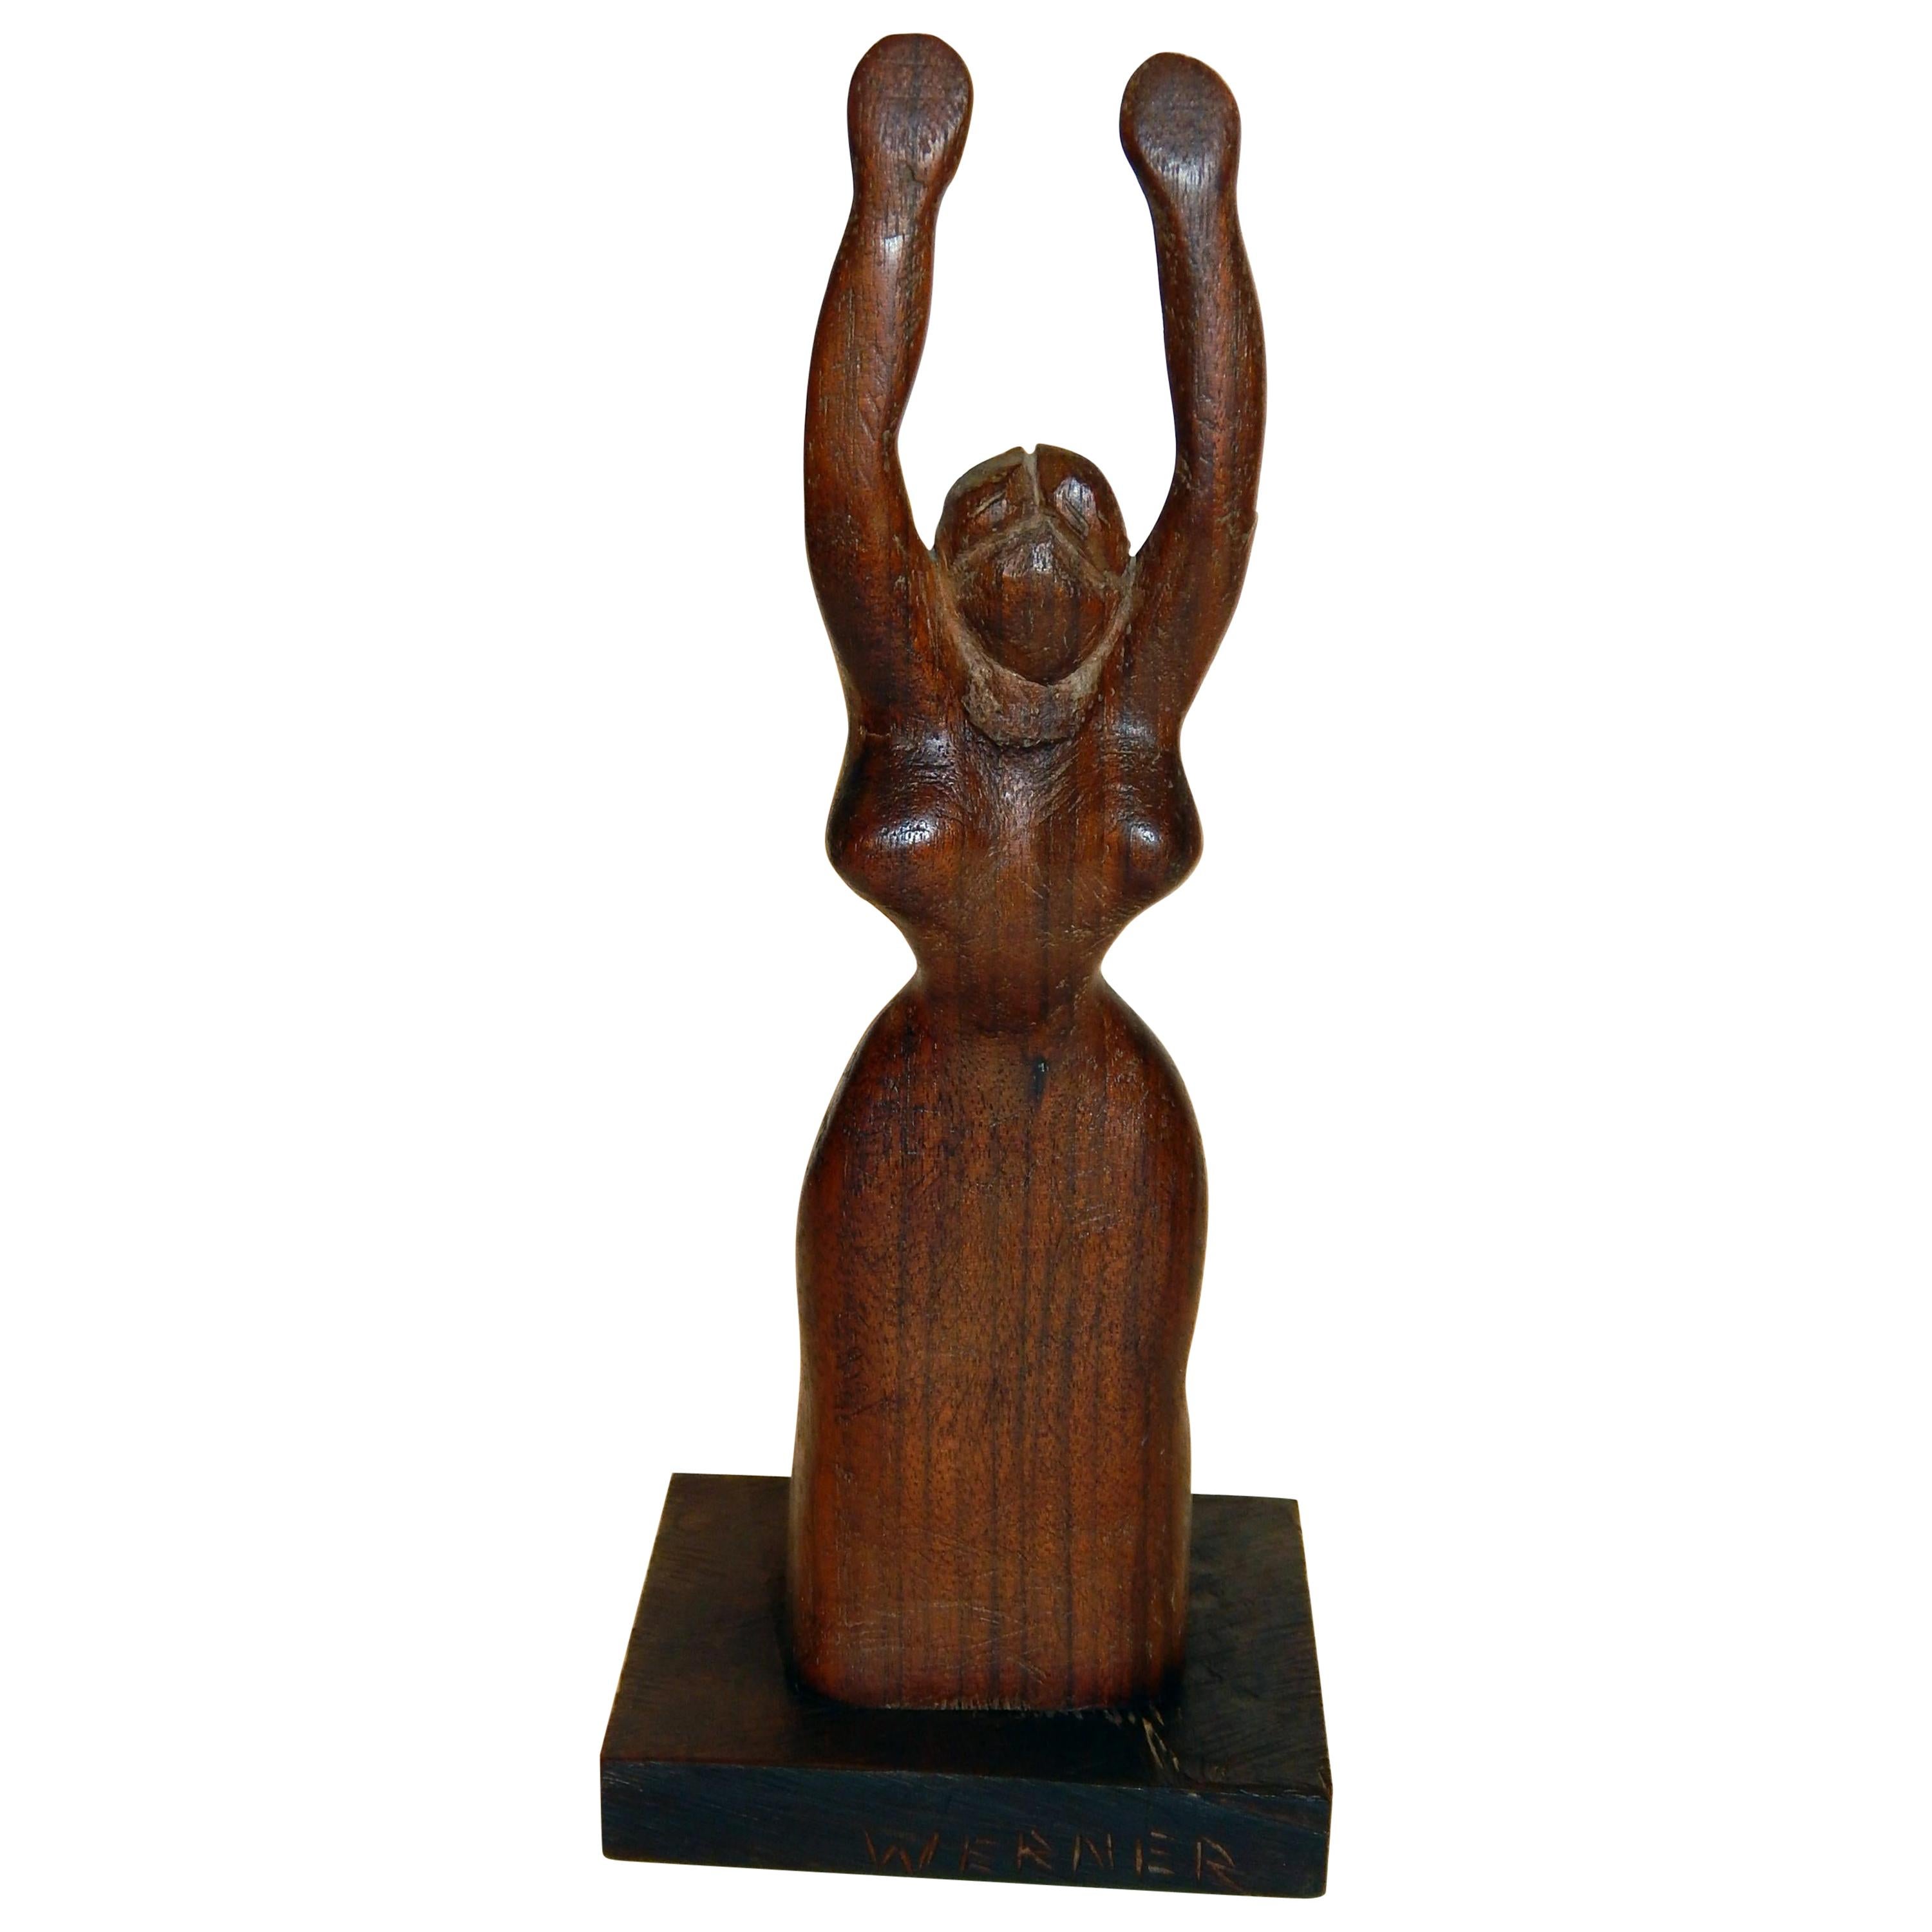 Nat Werner sculpture originale en bois, figure féminine